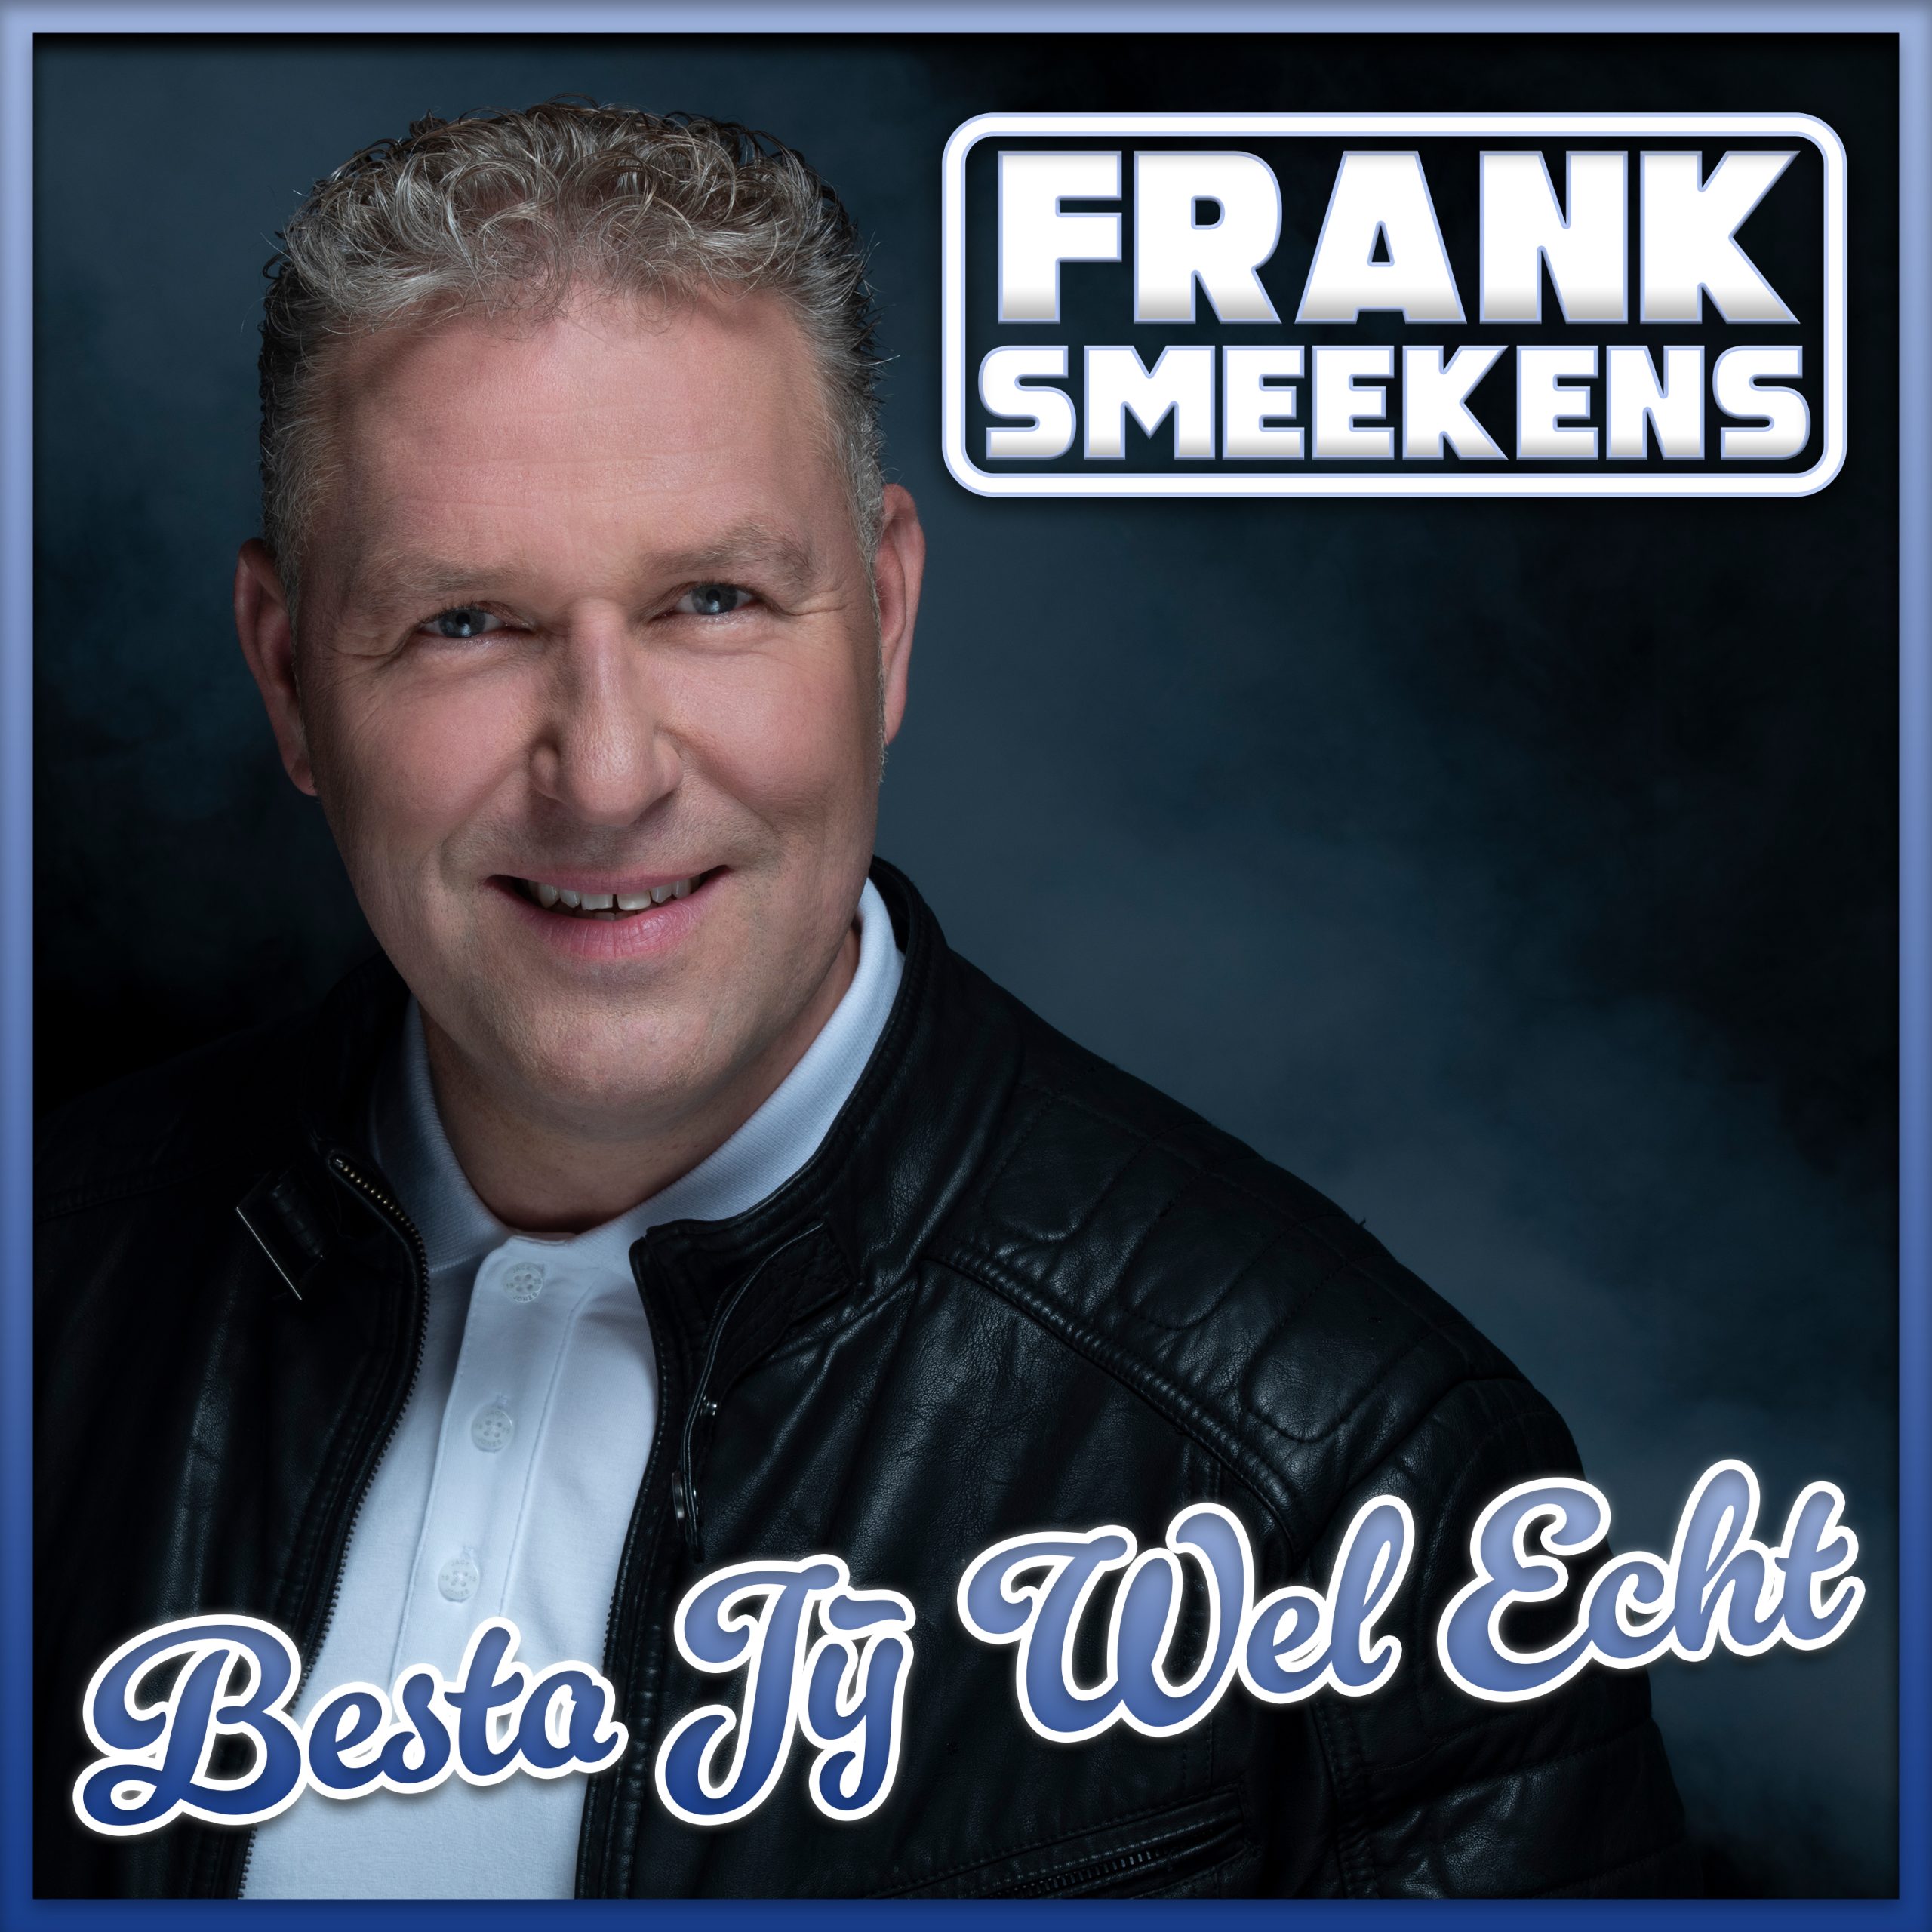 Frank Smeekens – Besta jij wel echt – Week 22